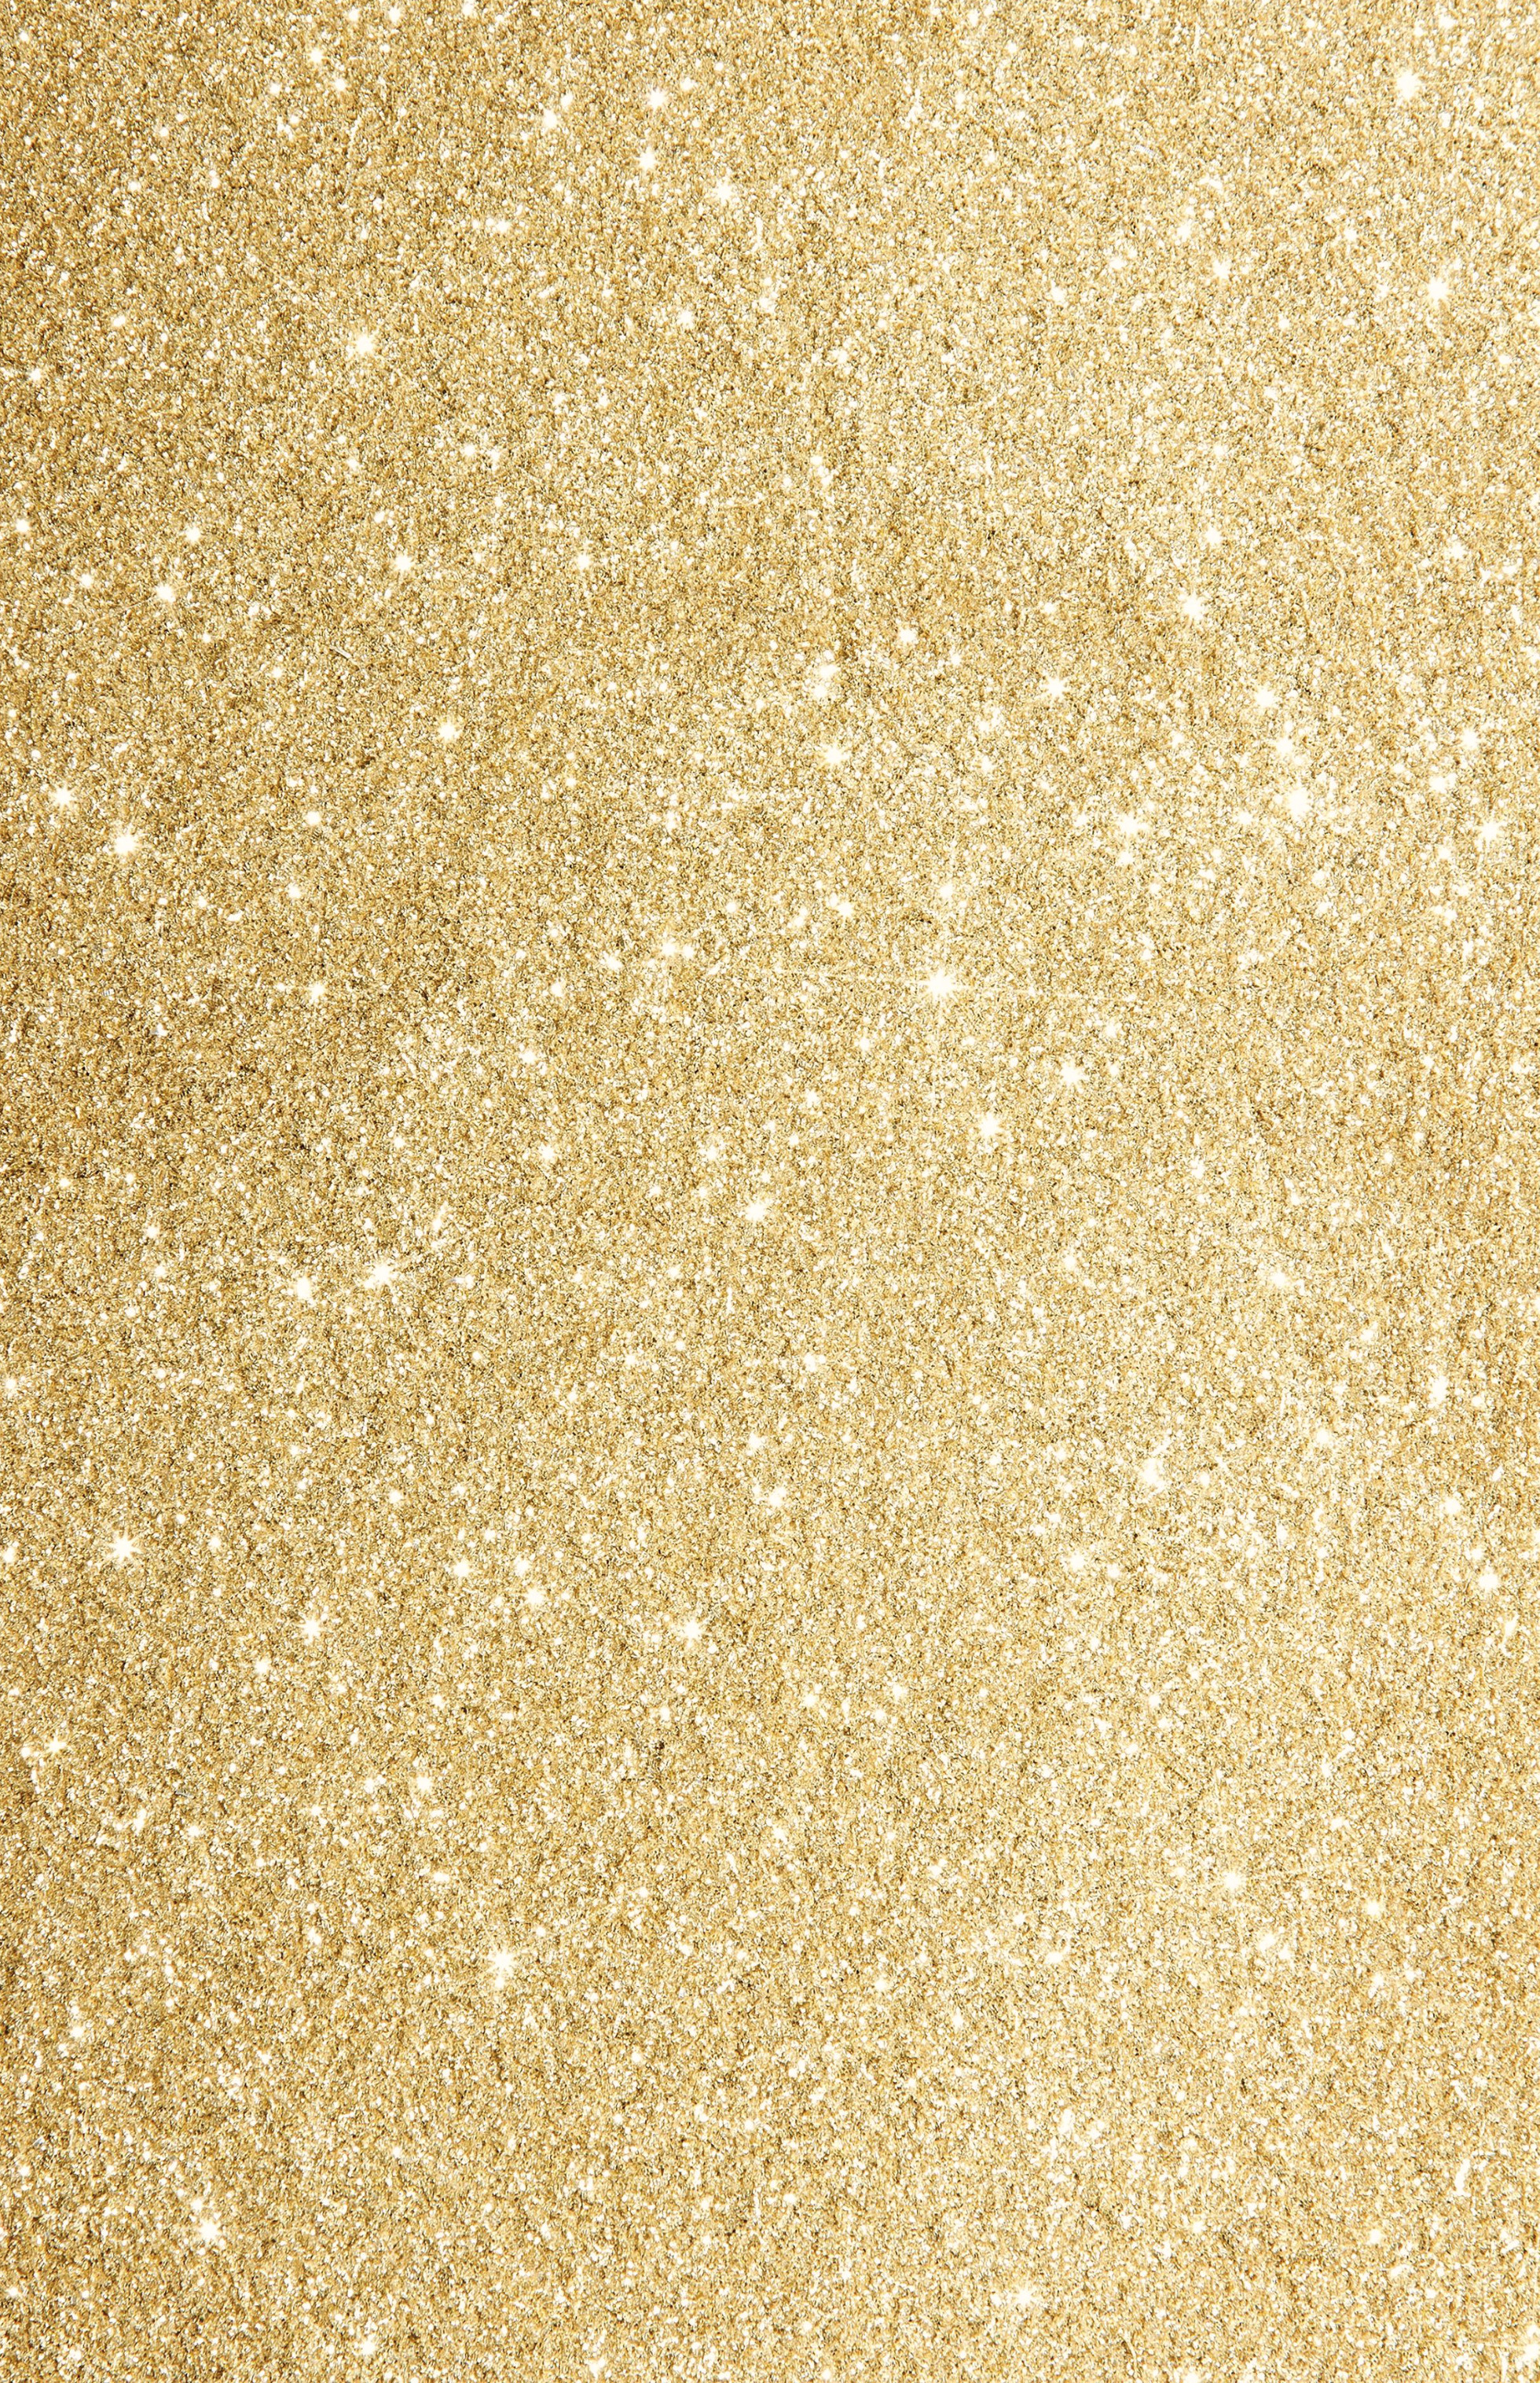 1960x3032 Gold Glitter background MÃ¡s